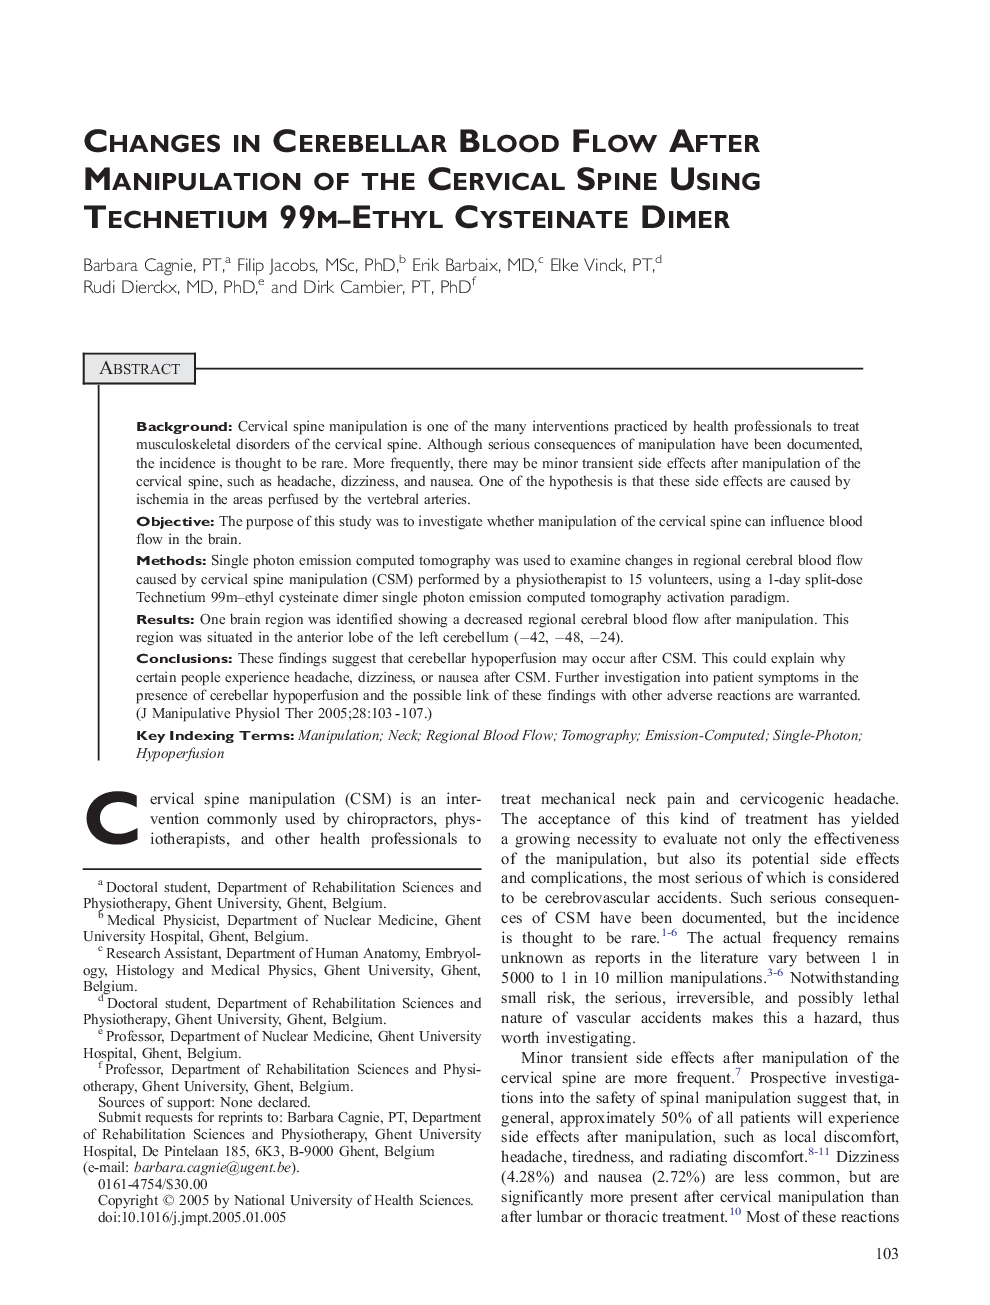 Changes in Cerebellar Blood Flow After Manipulation of the Cervical Spine Using Technetium 99m-Ethyl Cysteinate Dimer